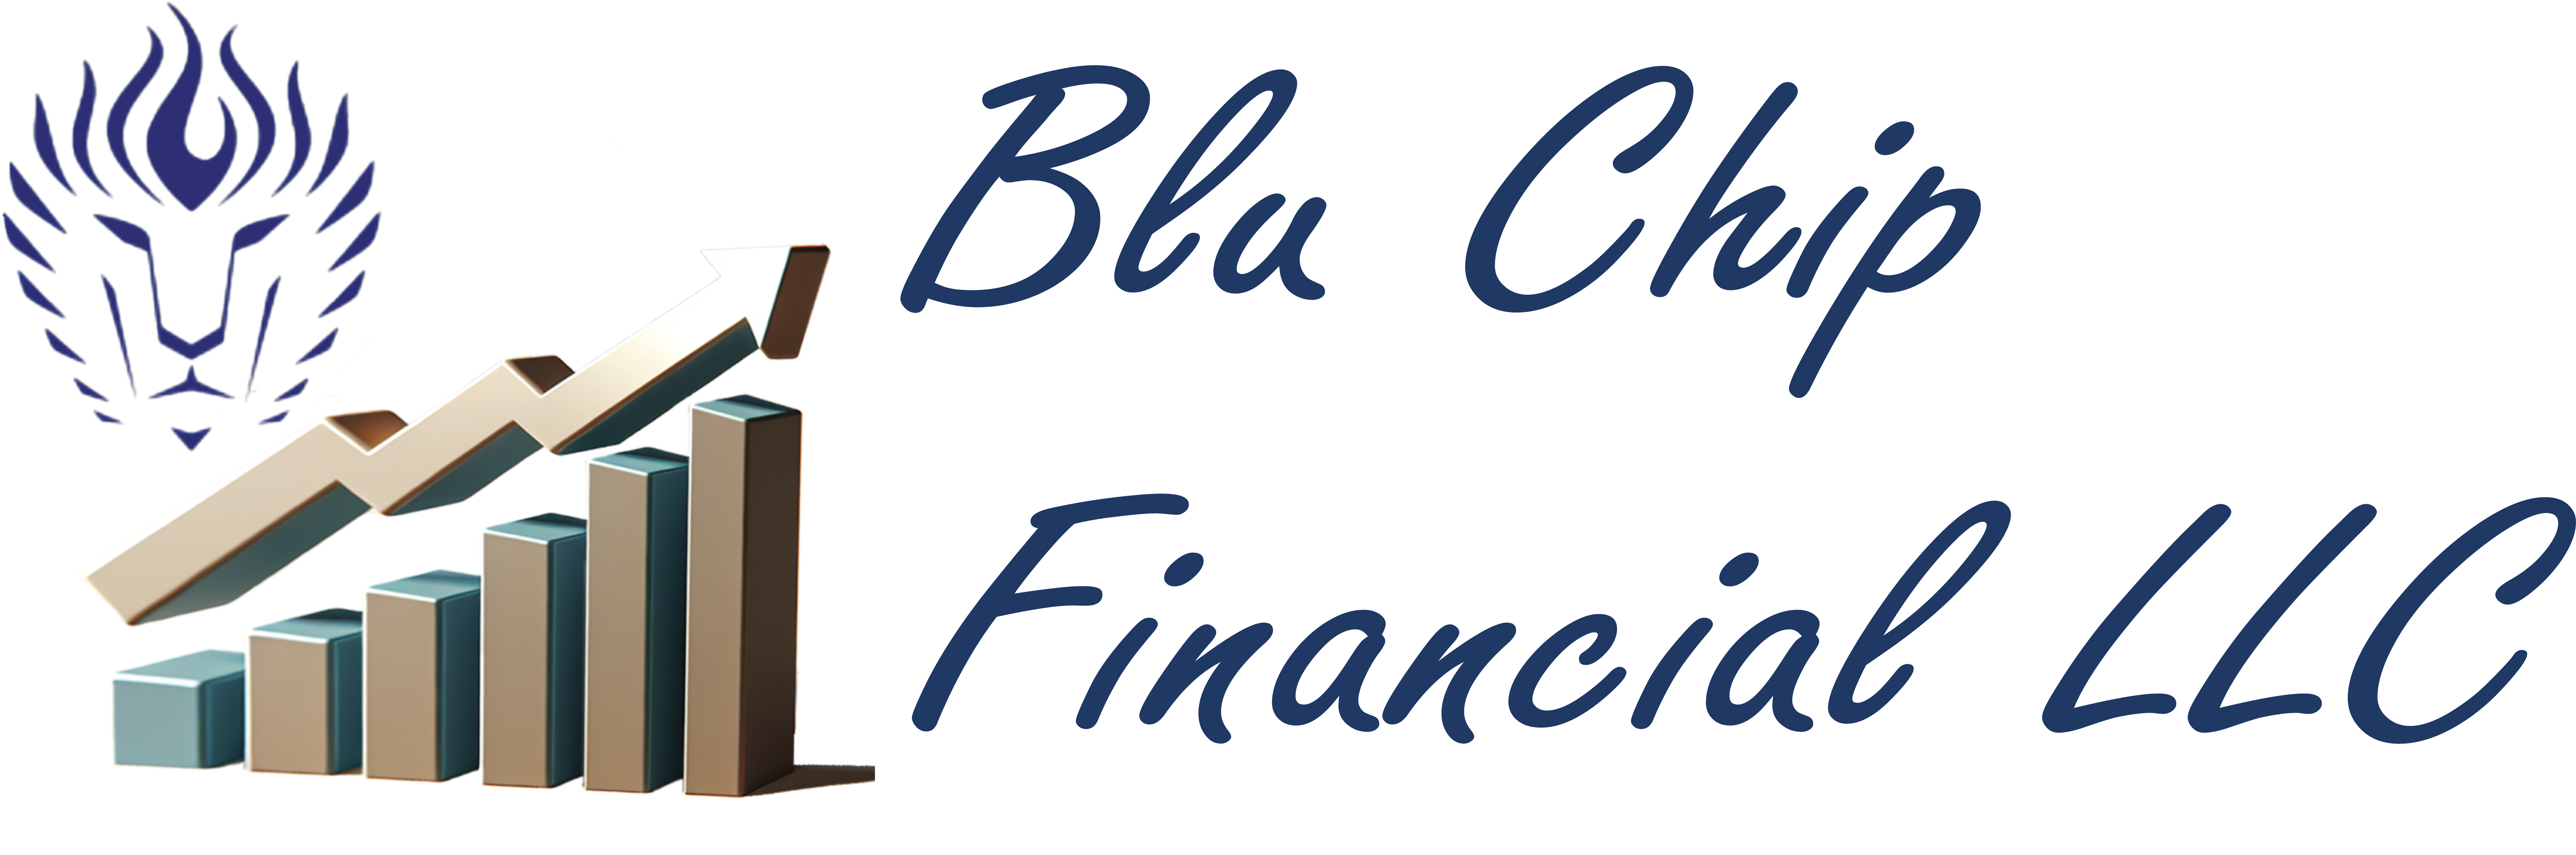 Blu Chip Financial Services